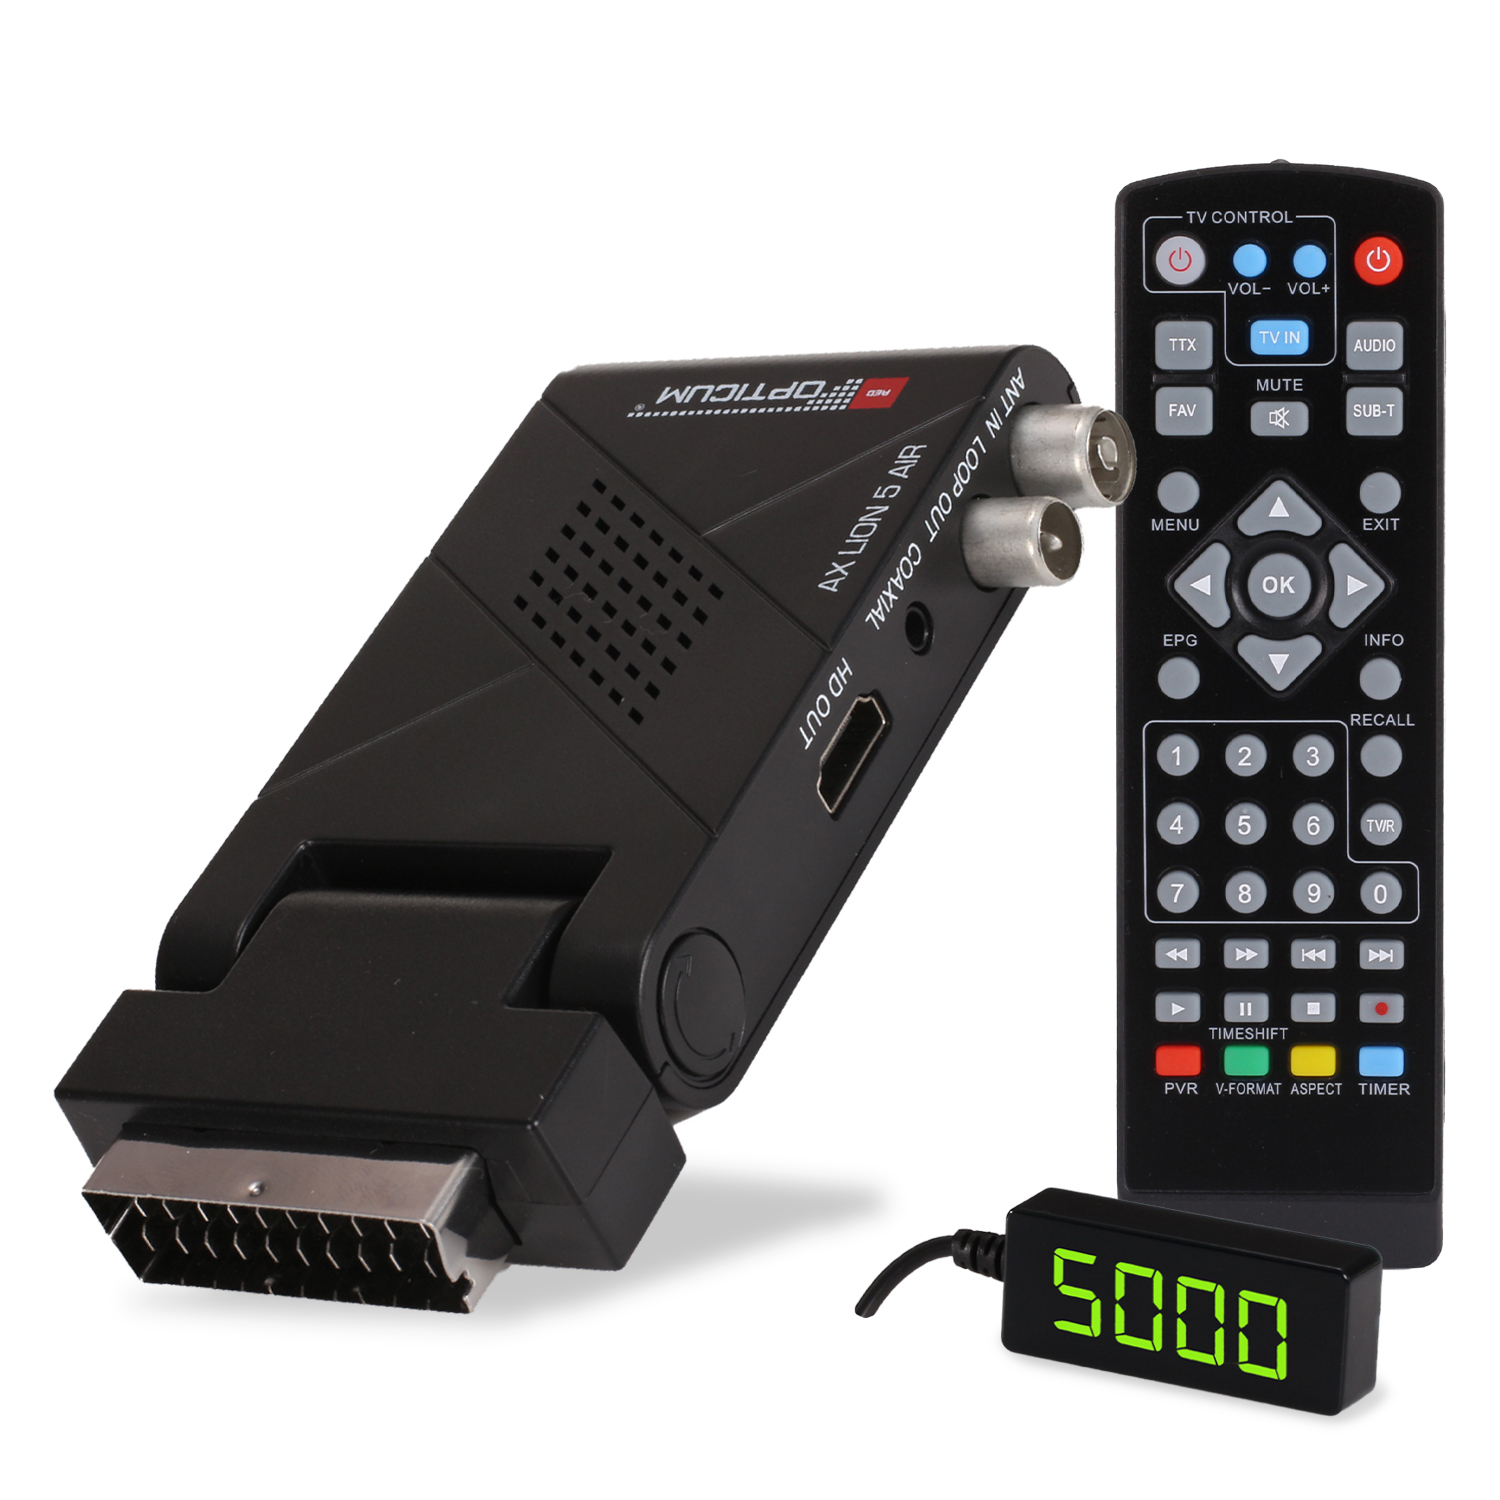 RED OPTICUM AX Lion HD (H.264), HD Receiver DVB-T2 SCART/ Receiver DVB-T2 I PVR Aufnahmefunktion schwarz) DVB-T2 DVB-T2 (HDTV, AIR HD-Receiver HDMI 5 DVB-T2 mit - PVR-Funktion, DVB-T, (H.265)